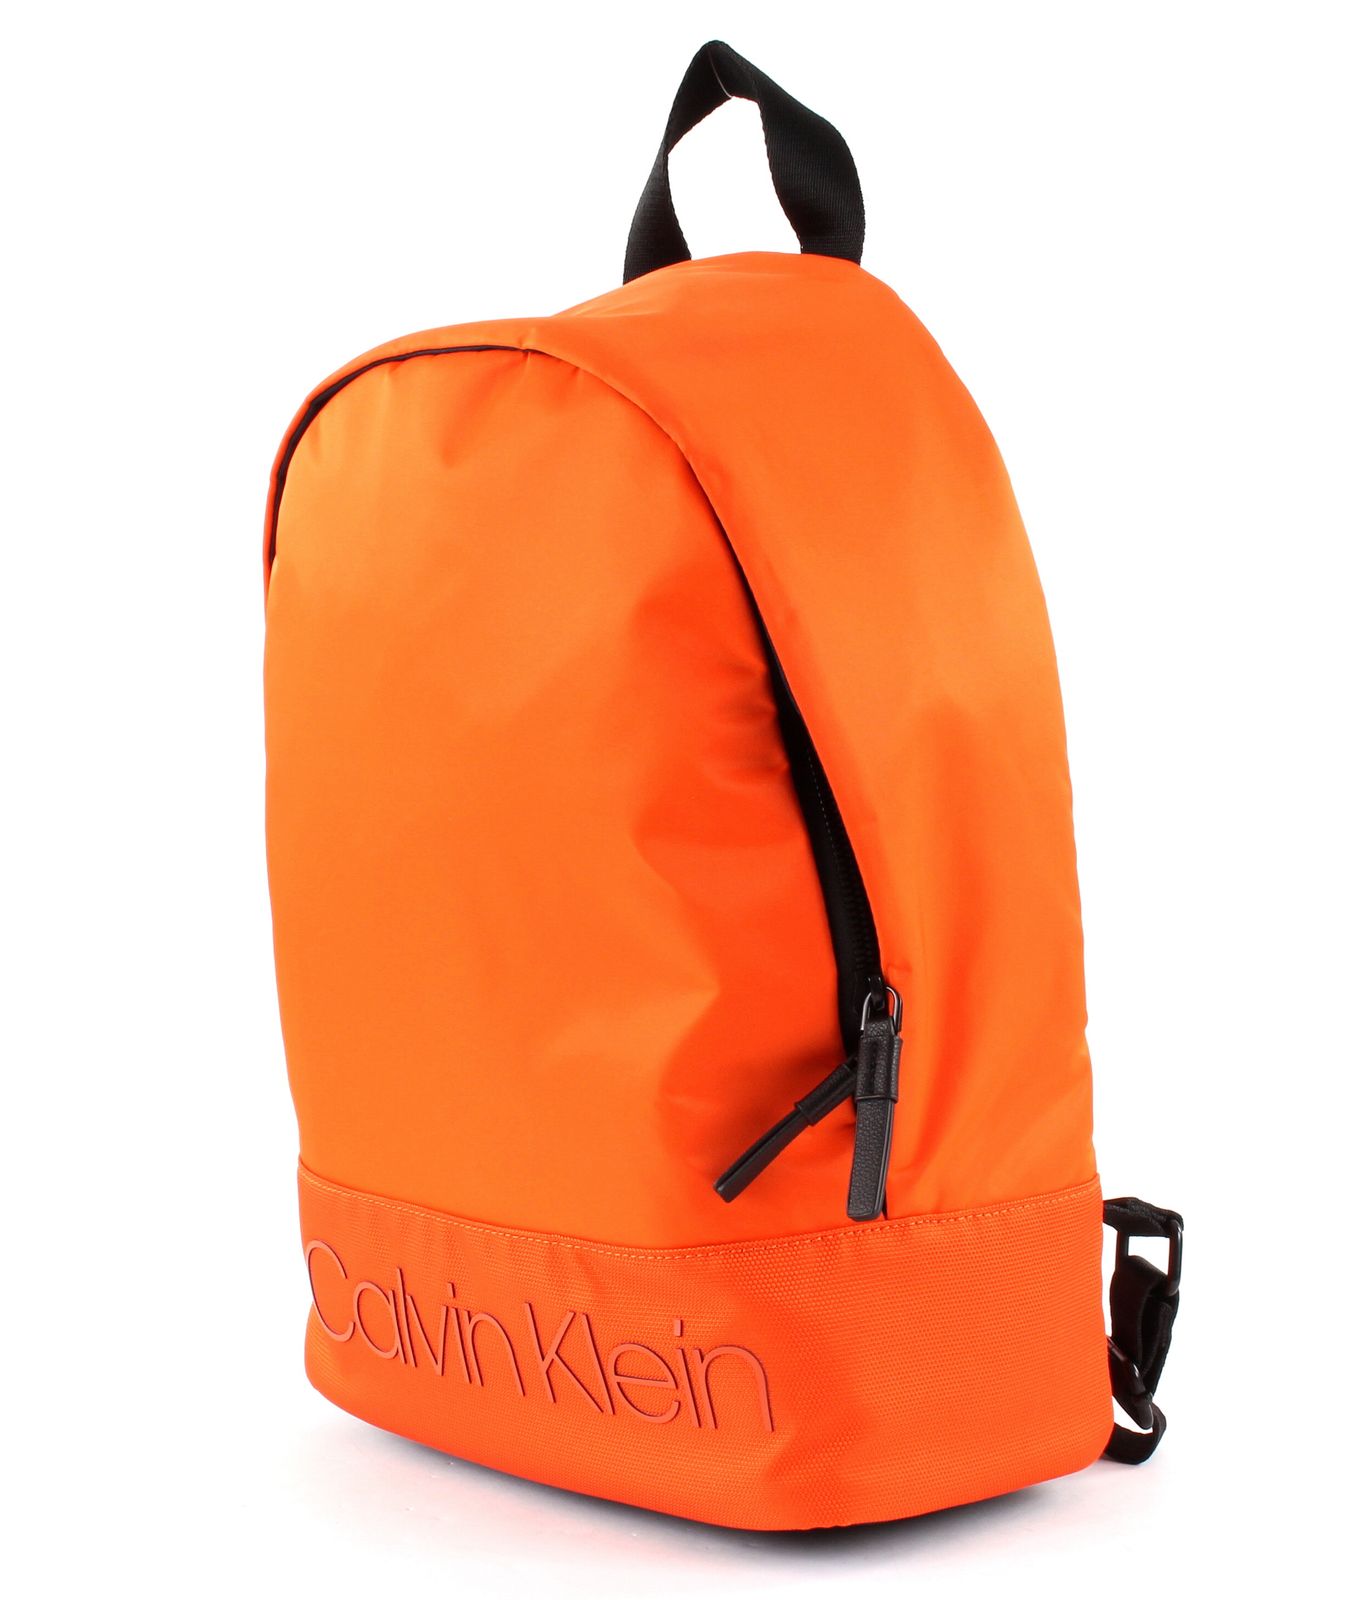 Calvin klein rucksack round backpack orange peel | eBay